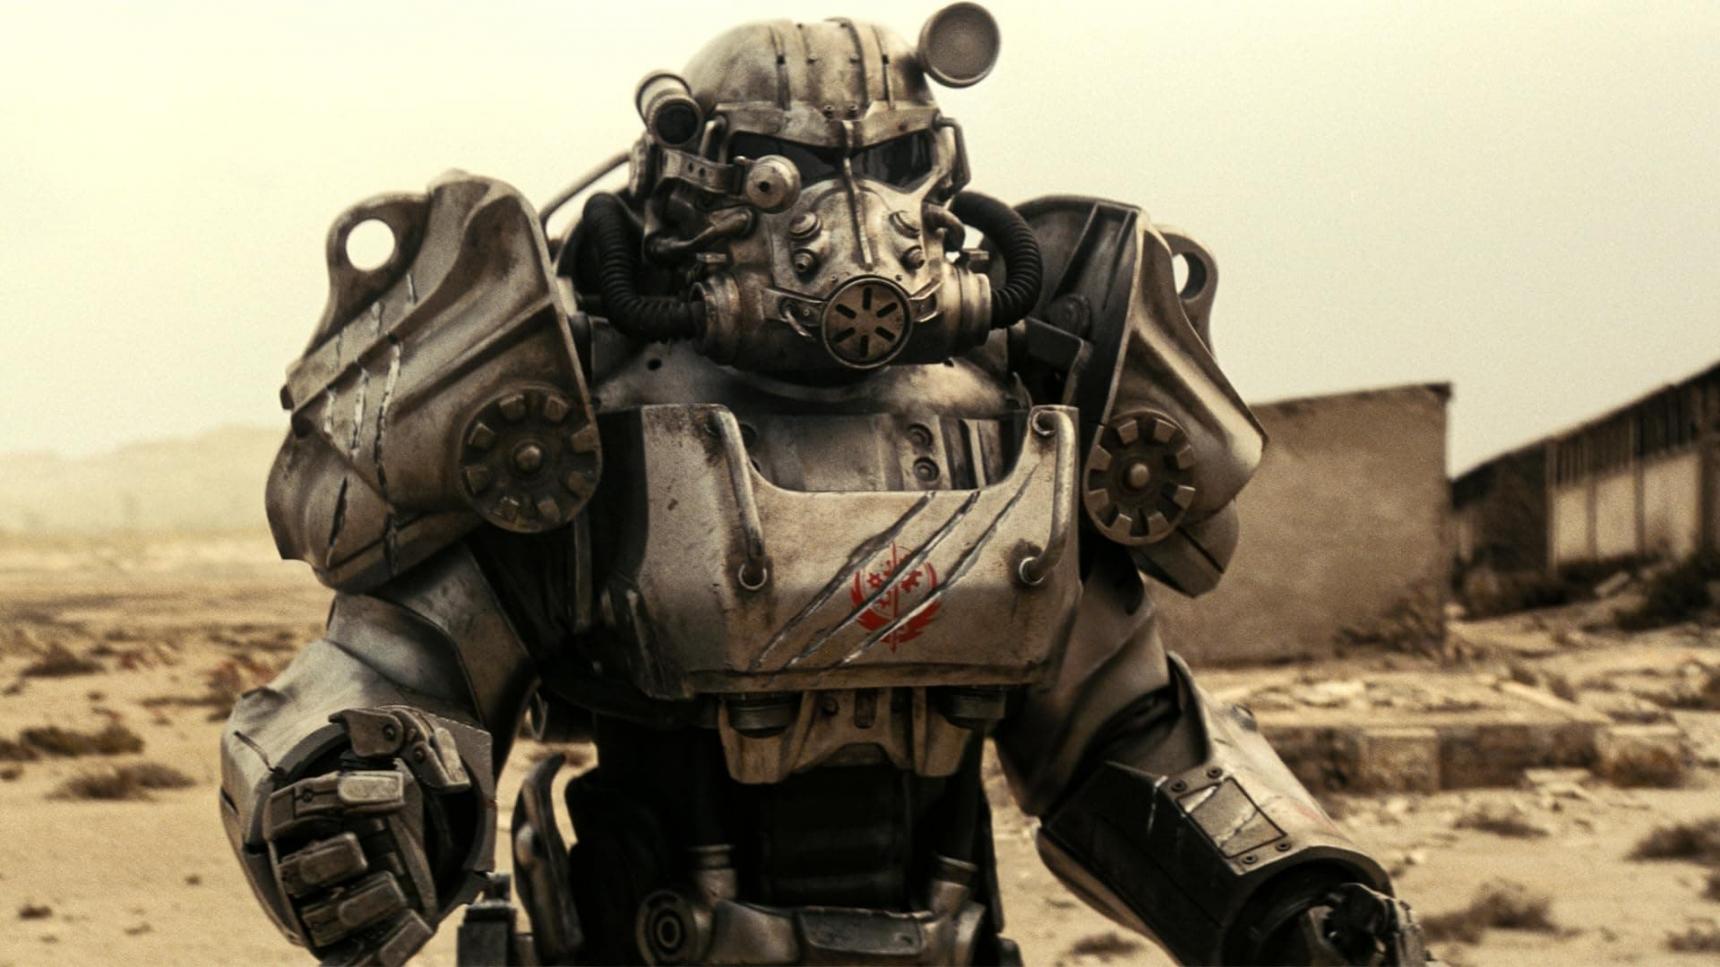 Poster del episodio 2 de Fallout online